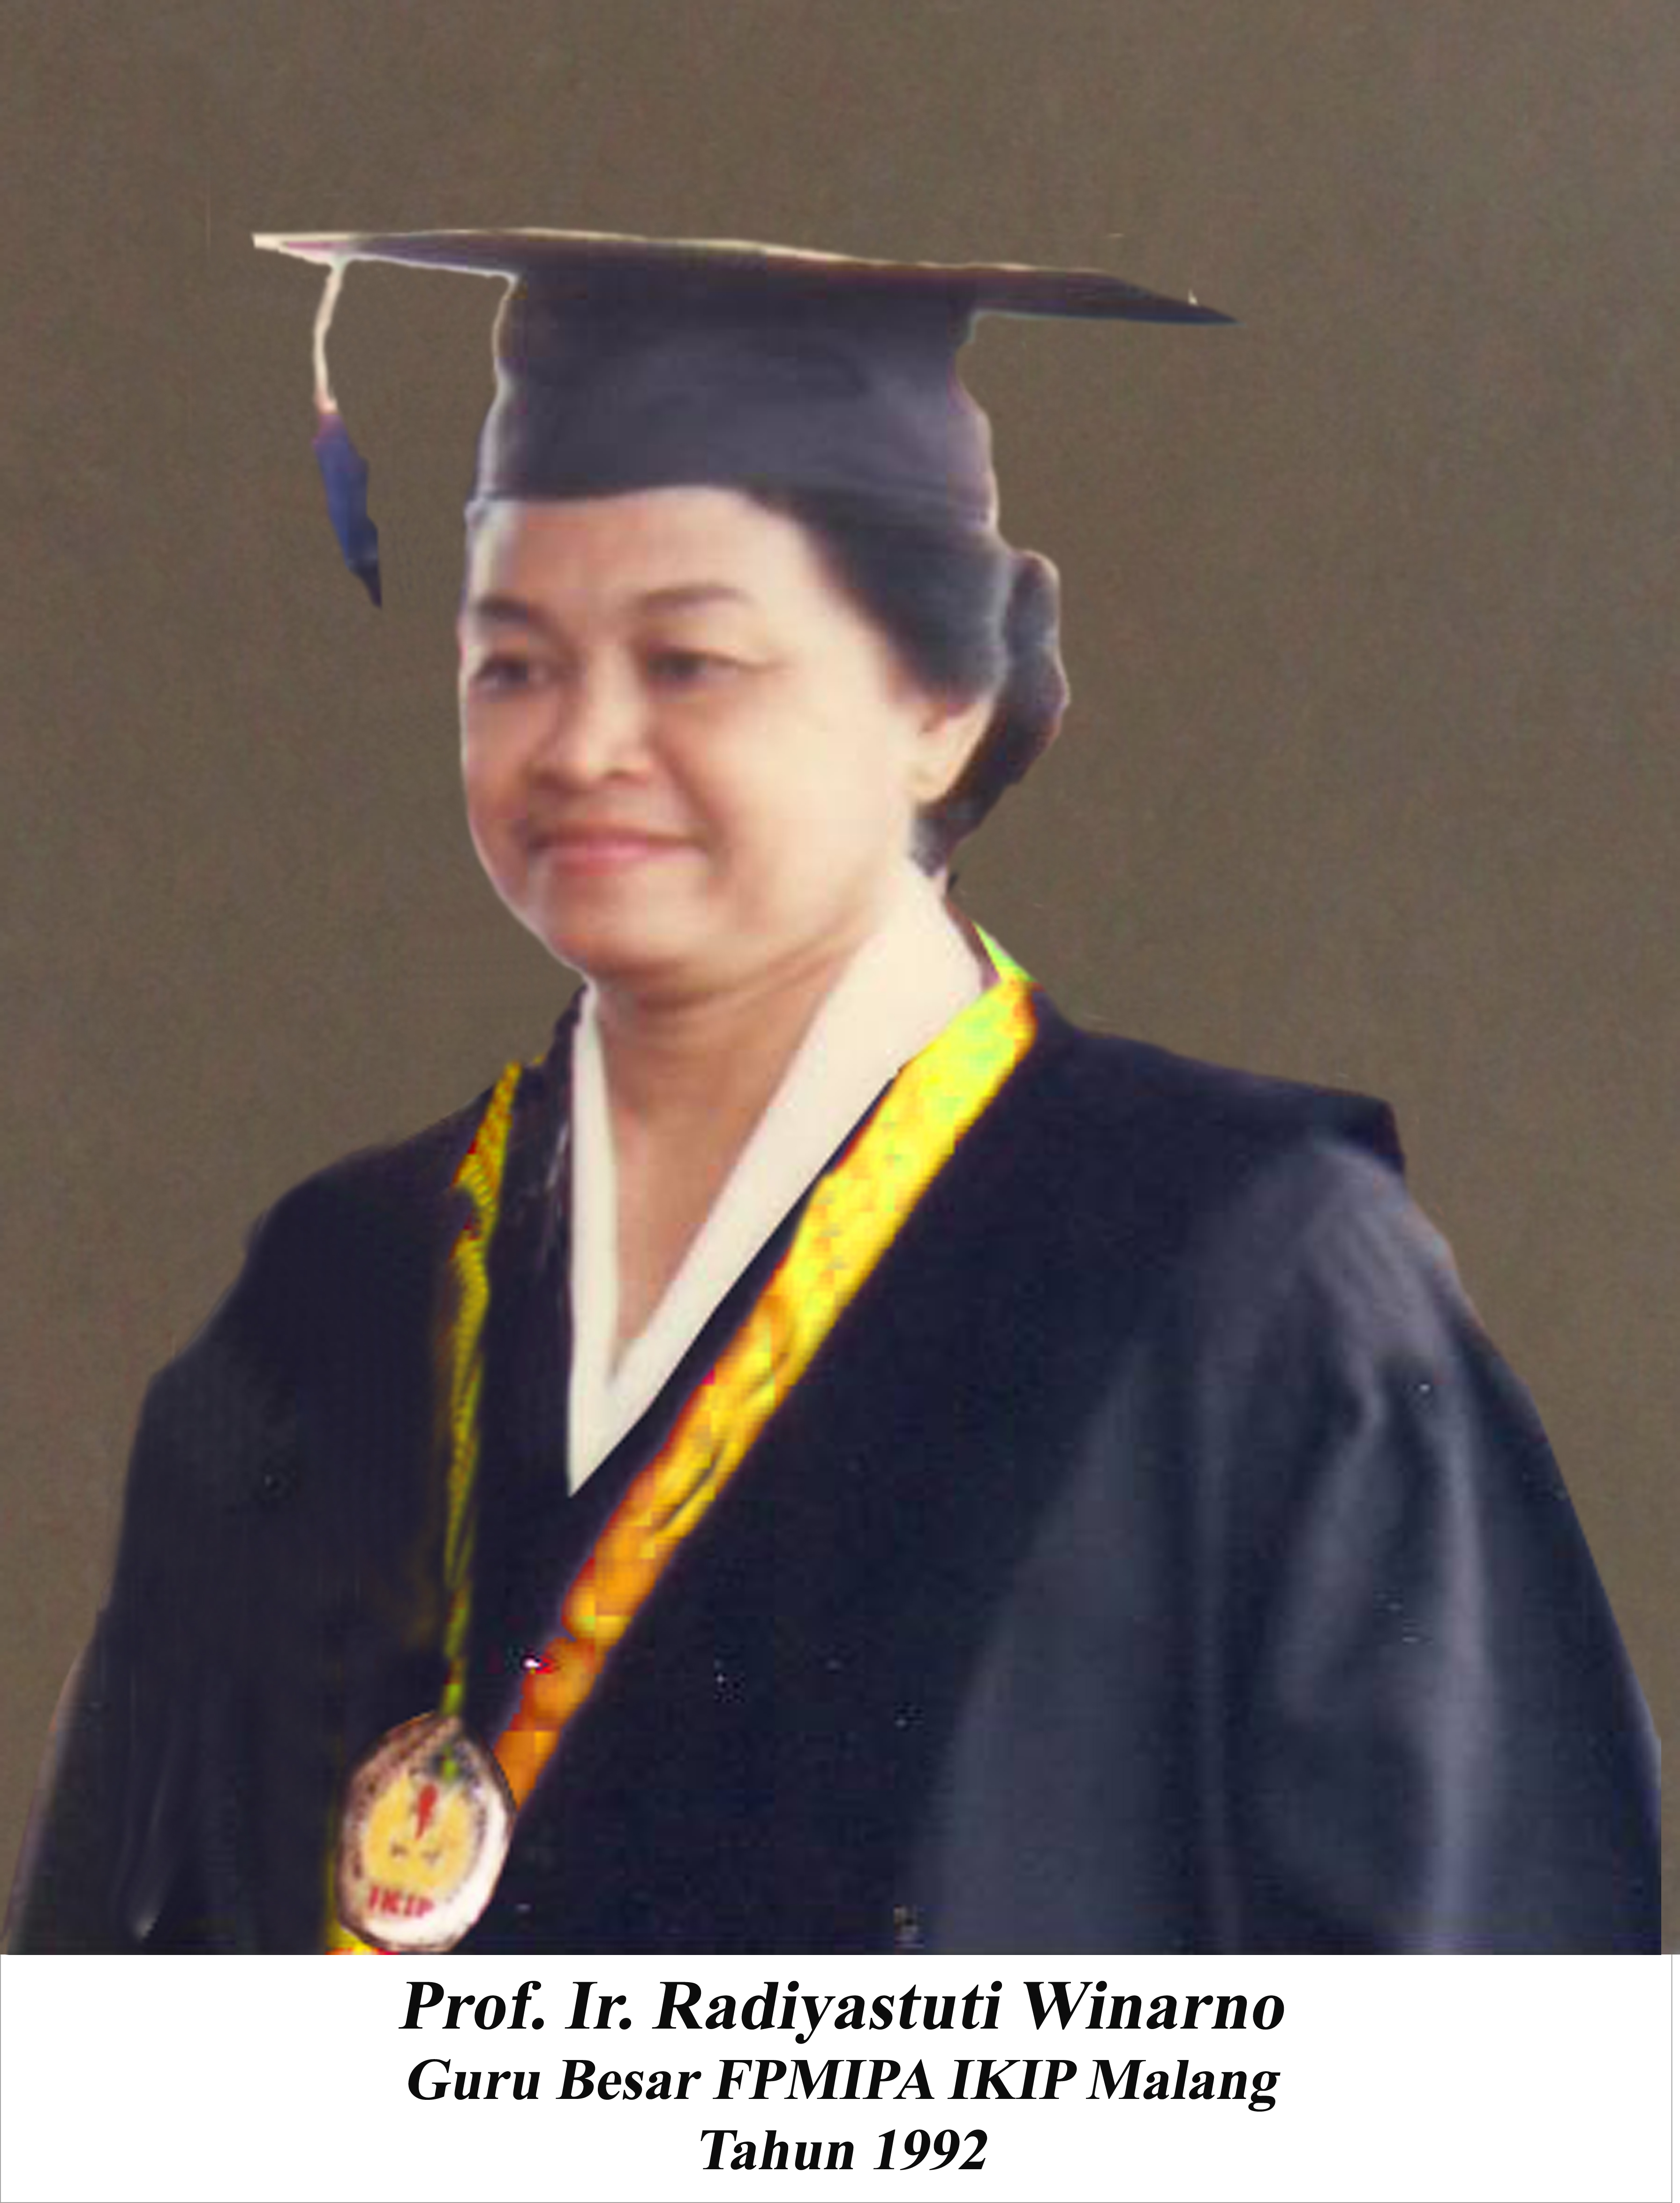 Radiyastuti mendapat gelar Ir. dari Fakultas Pertanian Institut Pertanian Bogor tahun 1961